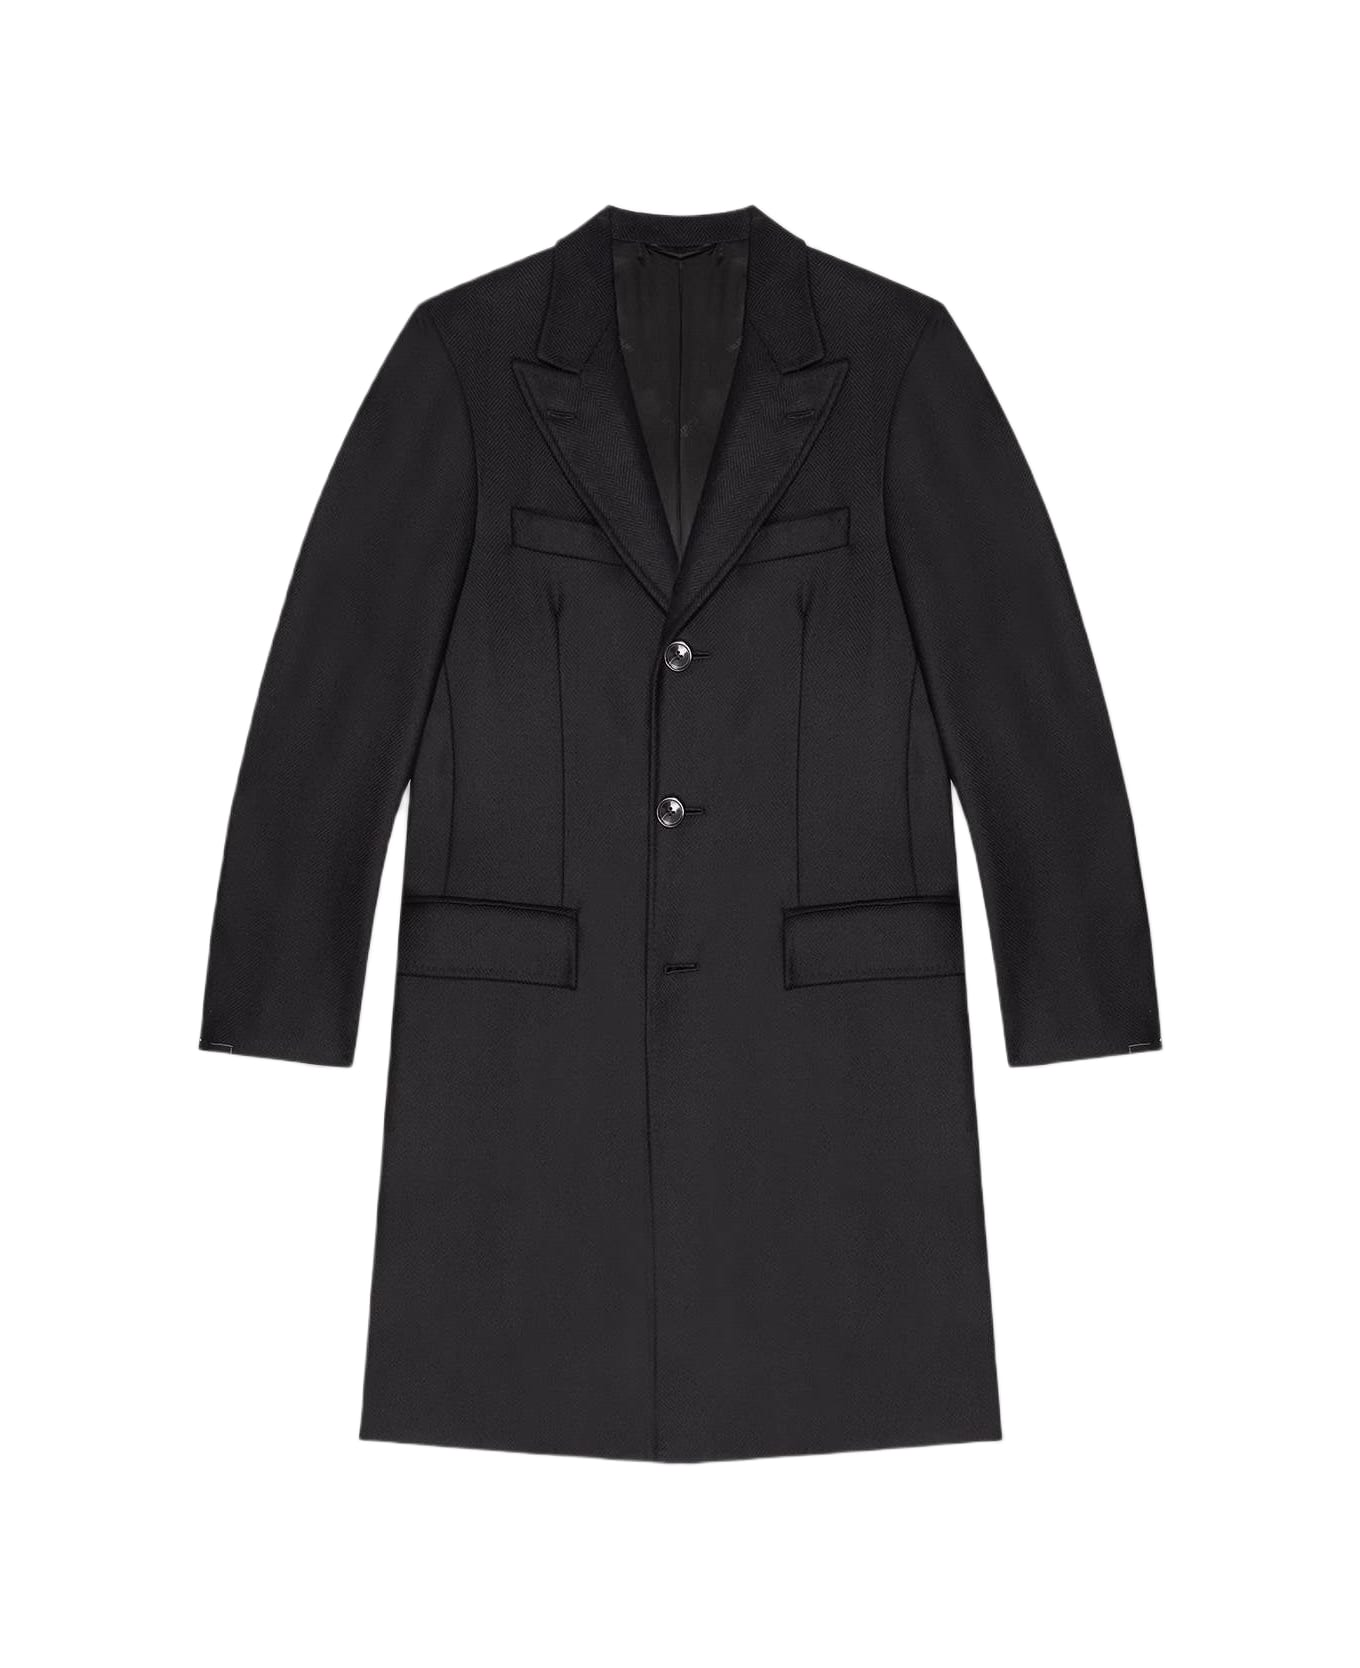 Larusmiani Handmade Overcoat Coat - SPINA NERO